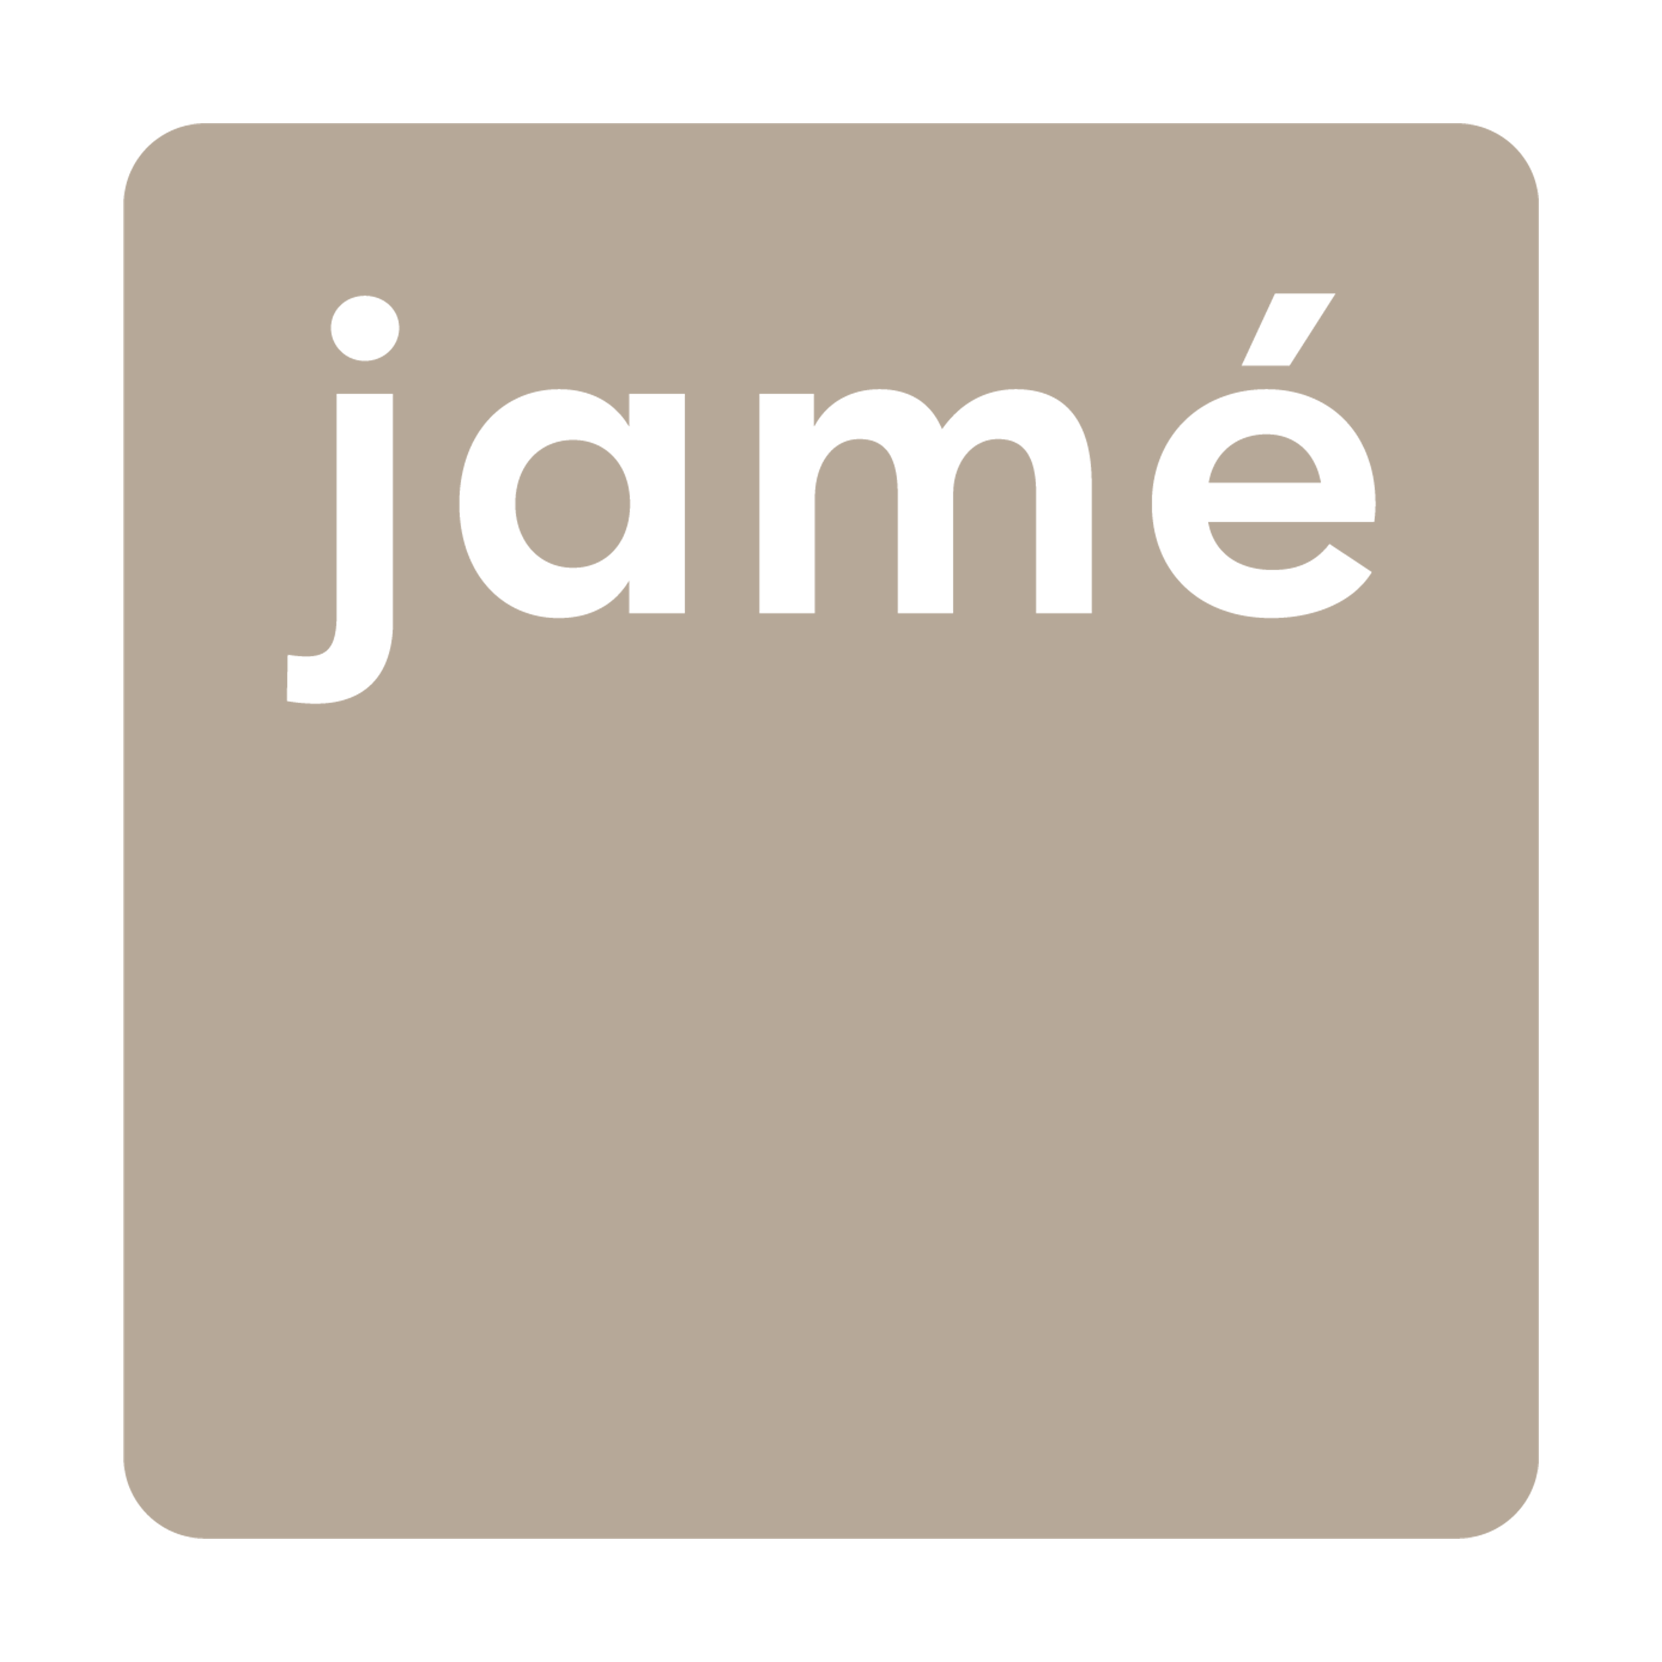 Logo Jame